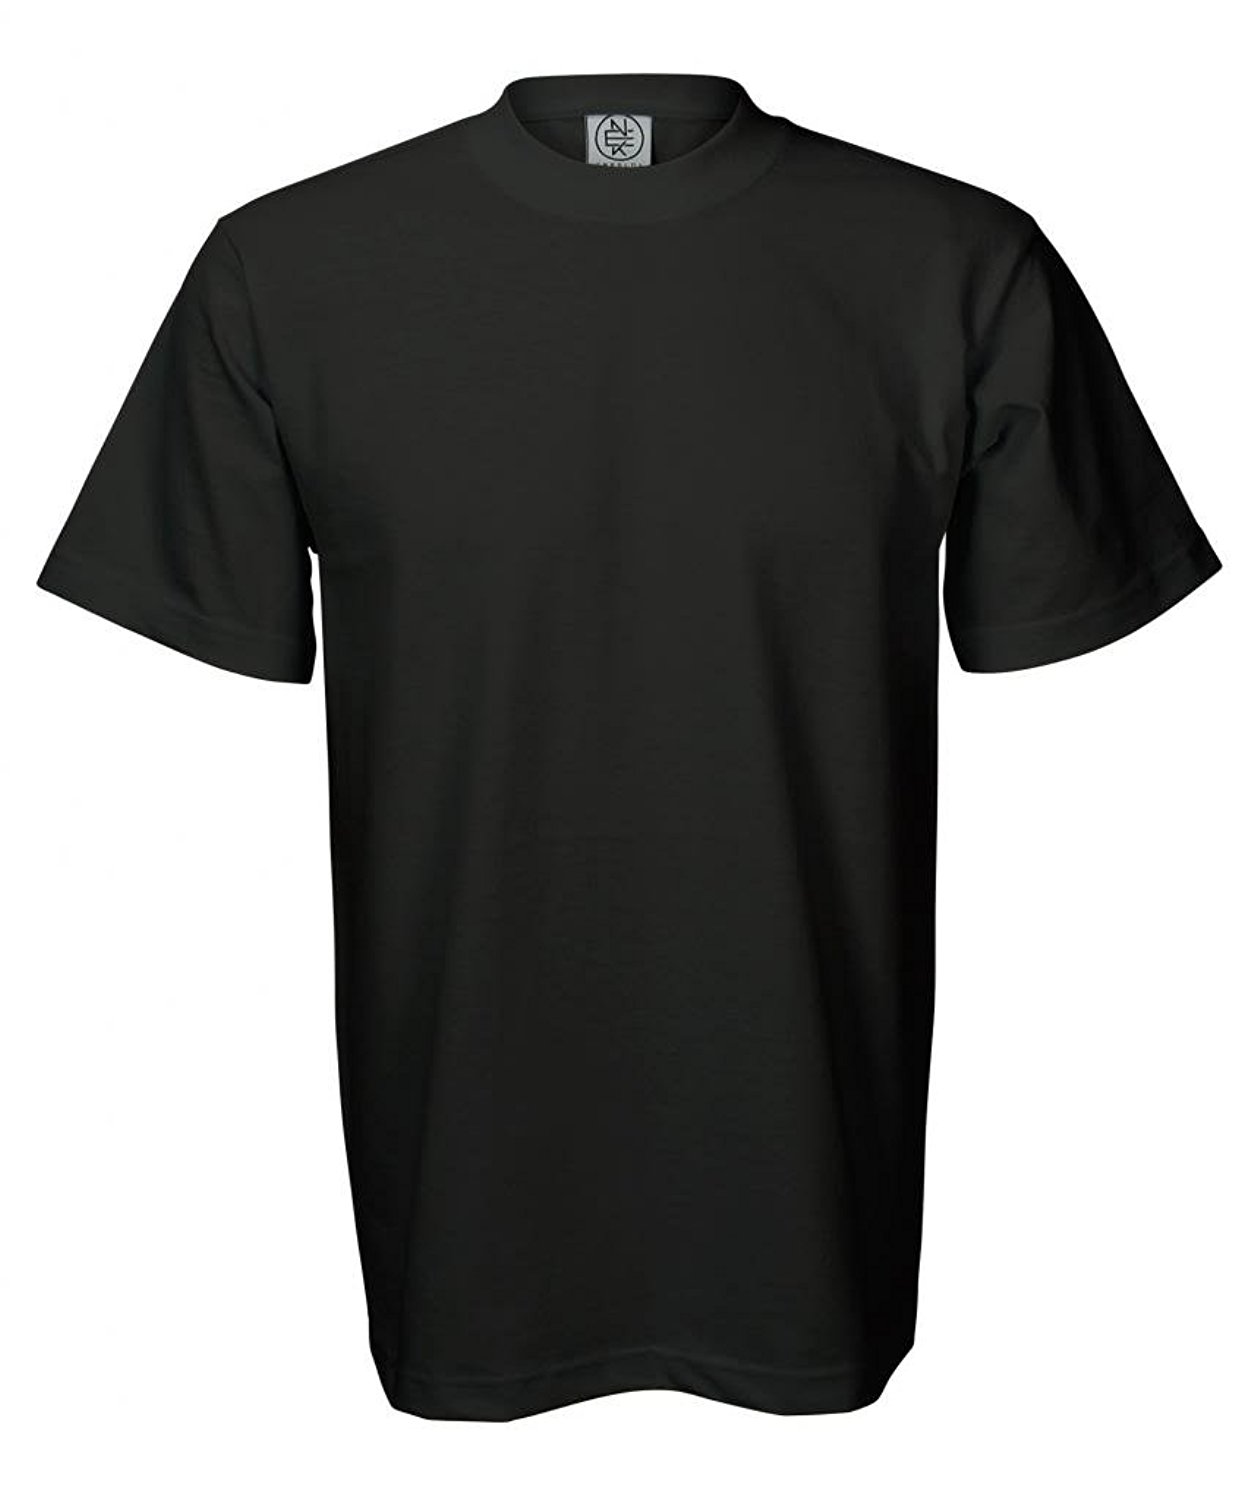 Plain Black T-shirts High Quality Images - ClipArt Best